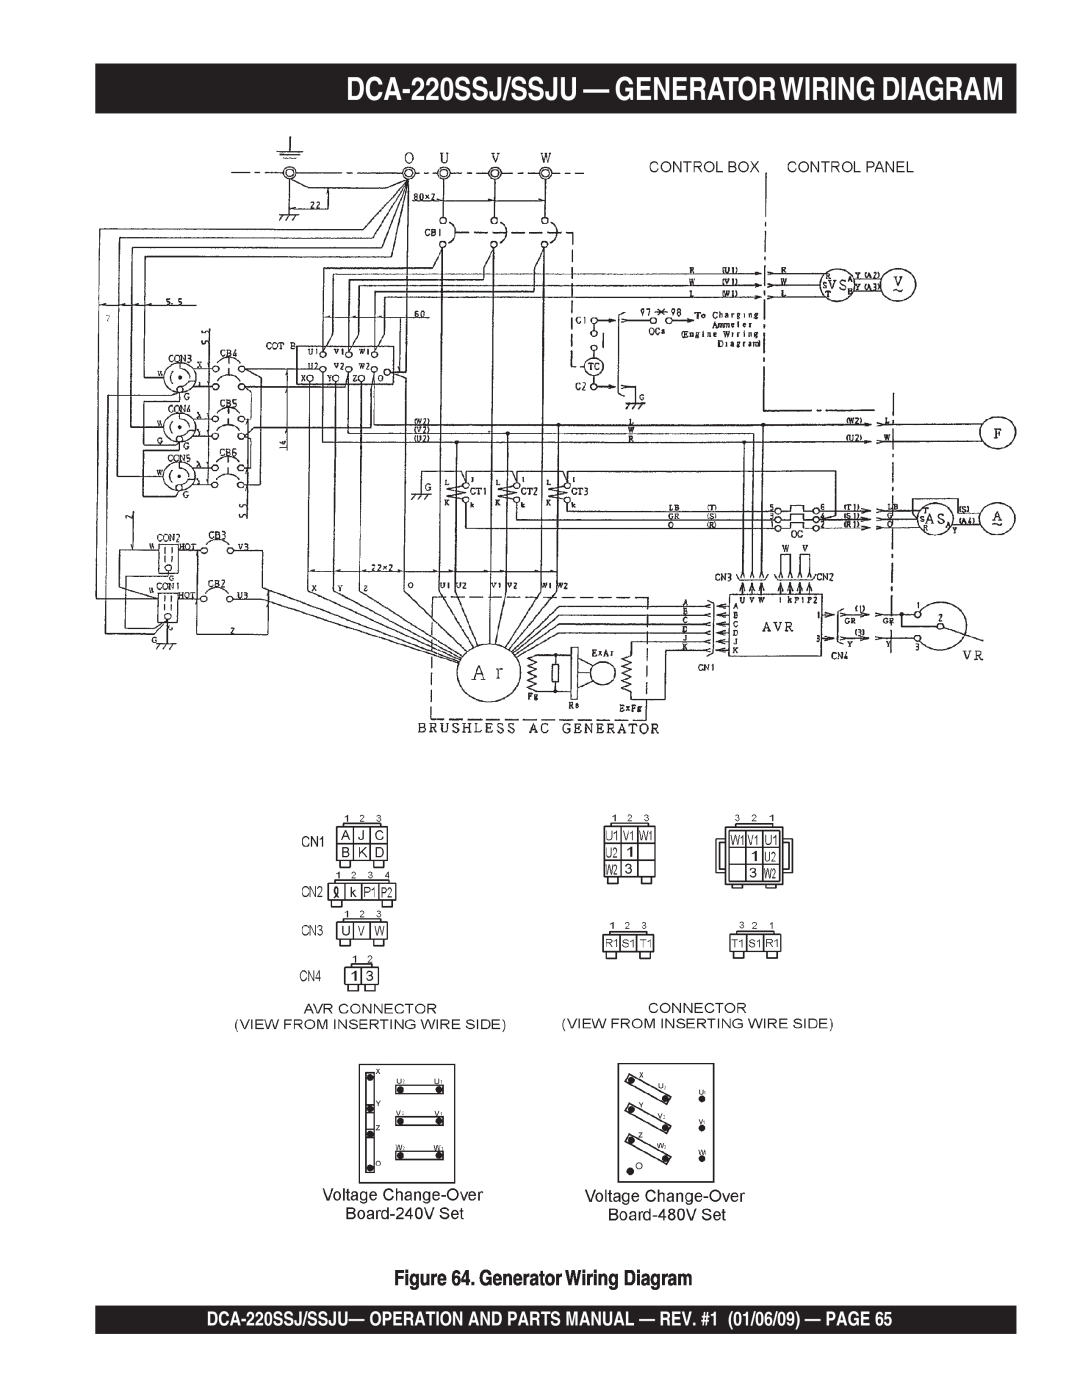 Multiquip operation manual DCA-220SSJ/SSJU - GENERATORWIRING DIAGRAM, Generator Wiring Diagram 